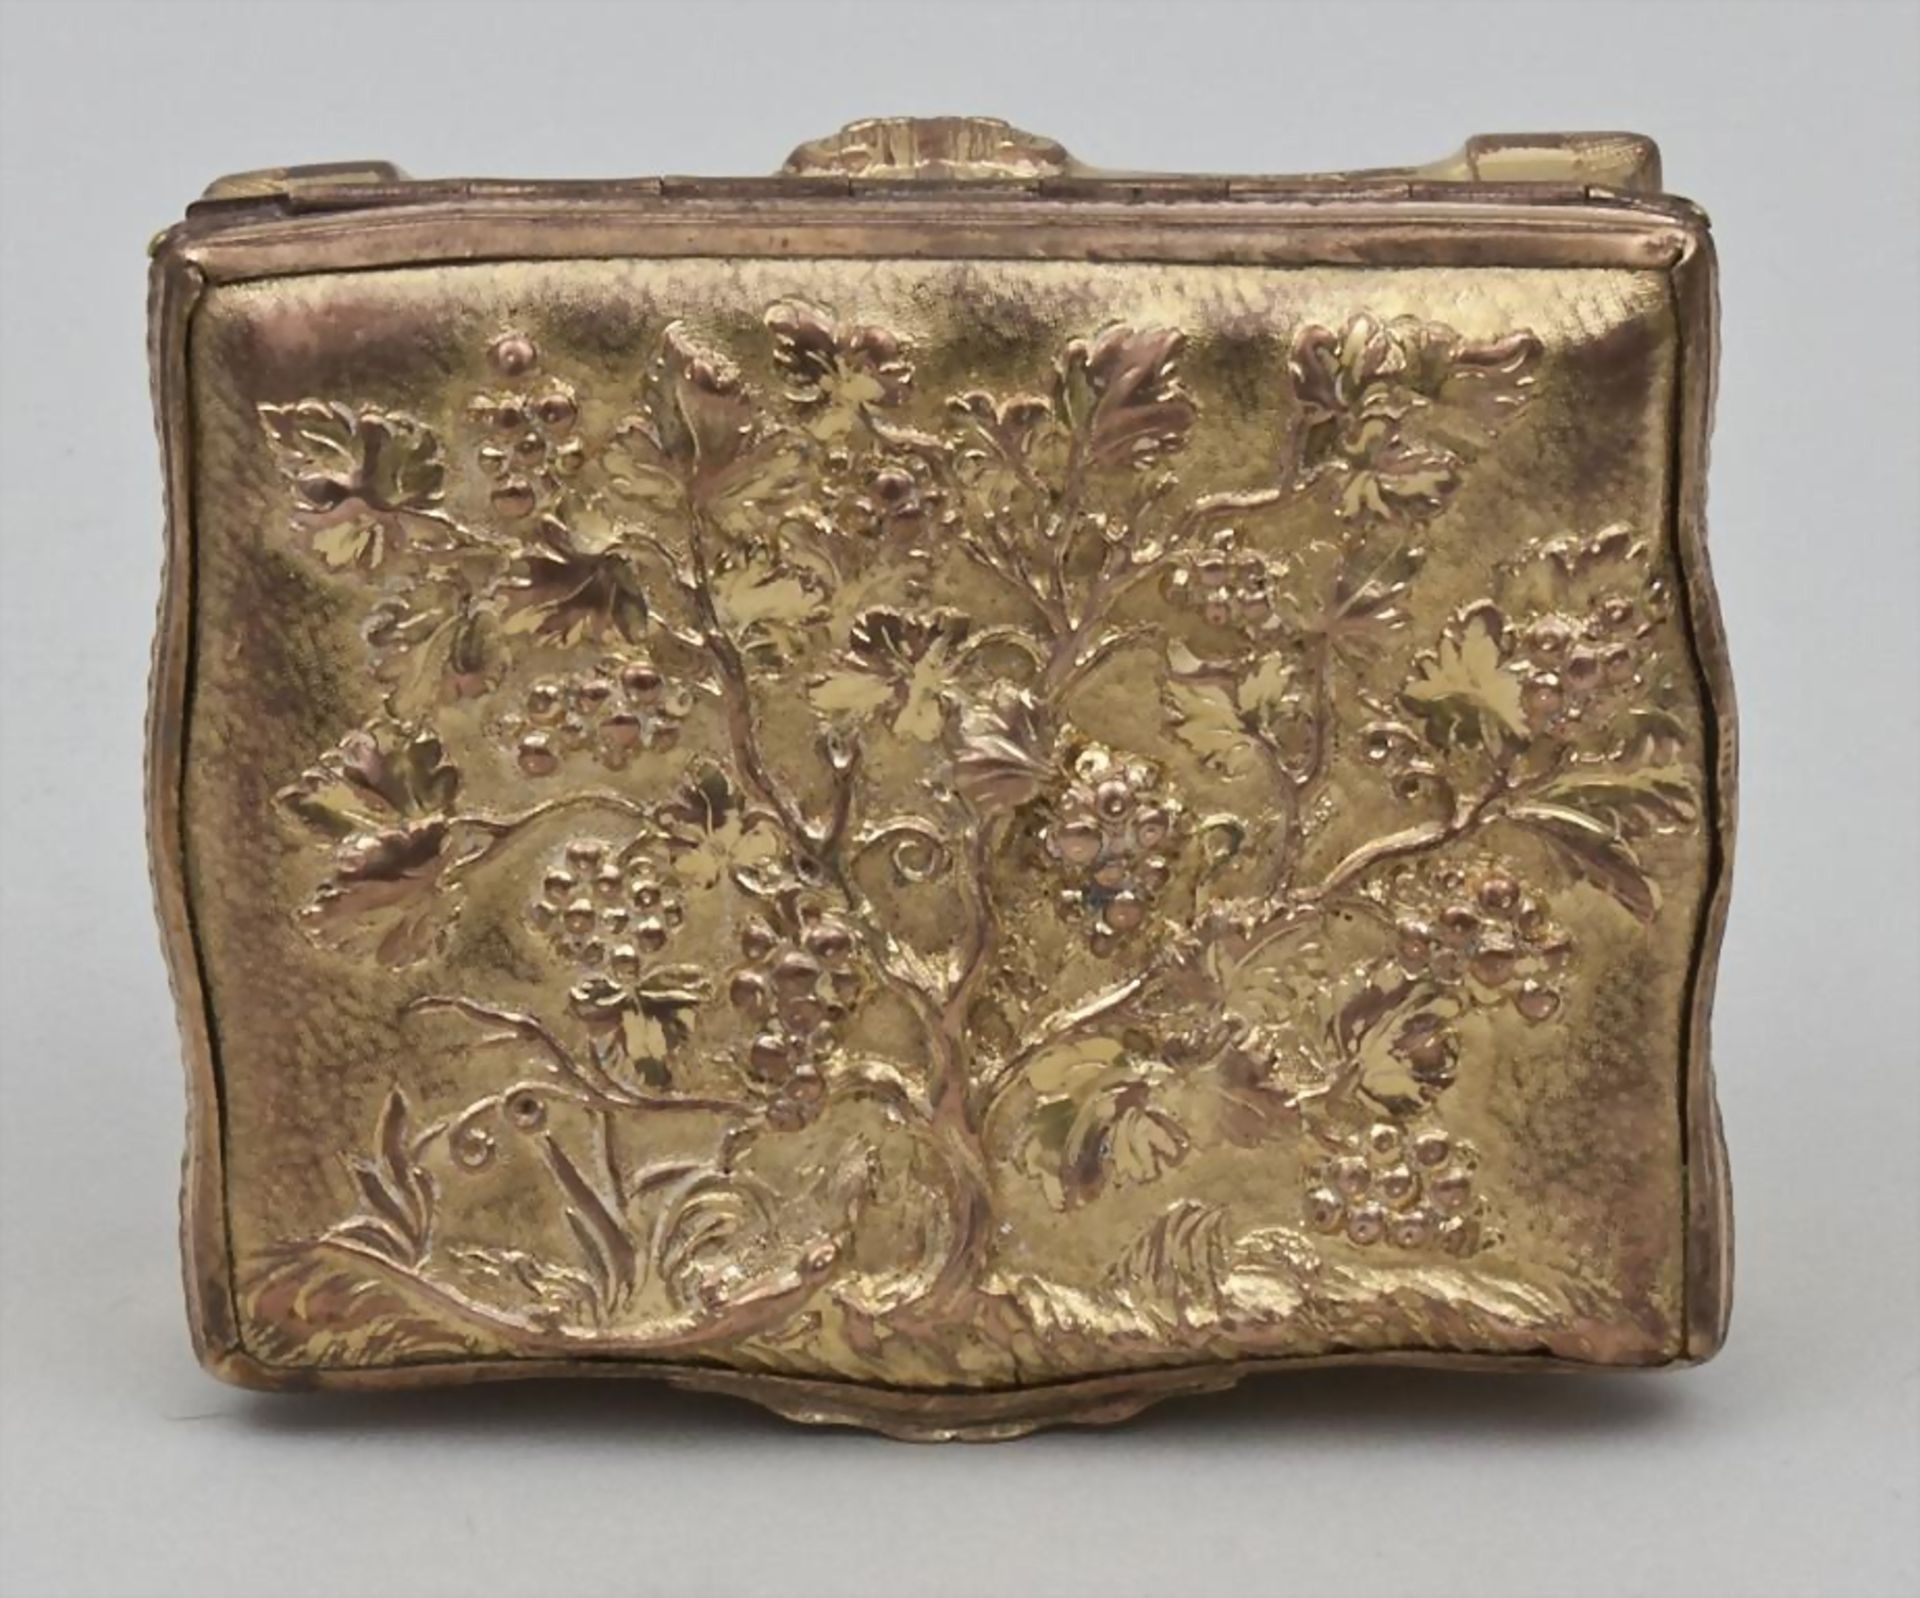 Barocke Bronze Tabatiere / Schnupftabakdose / A Baroque bronze snuffbox, um 1750 - Image 2 of 4